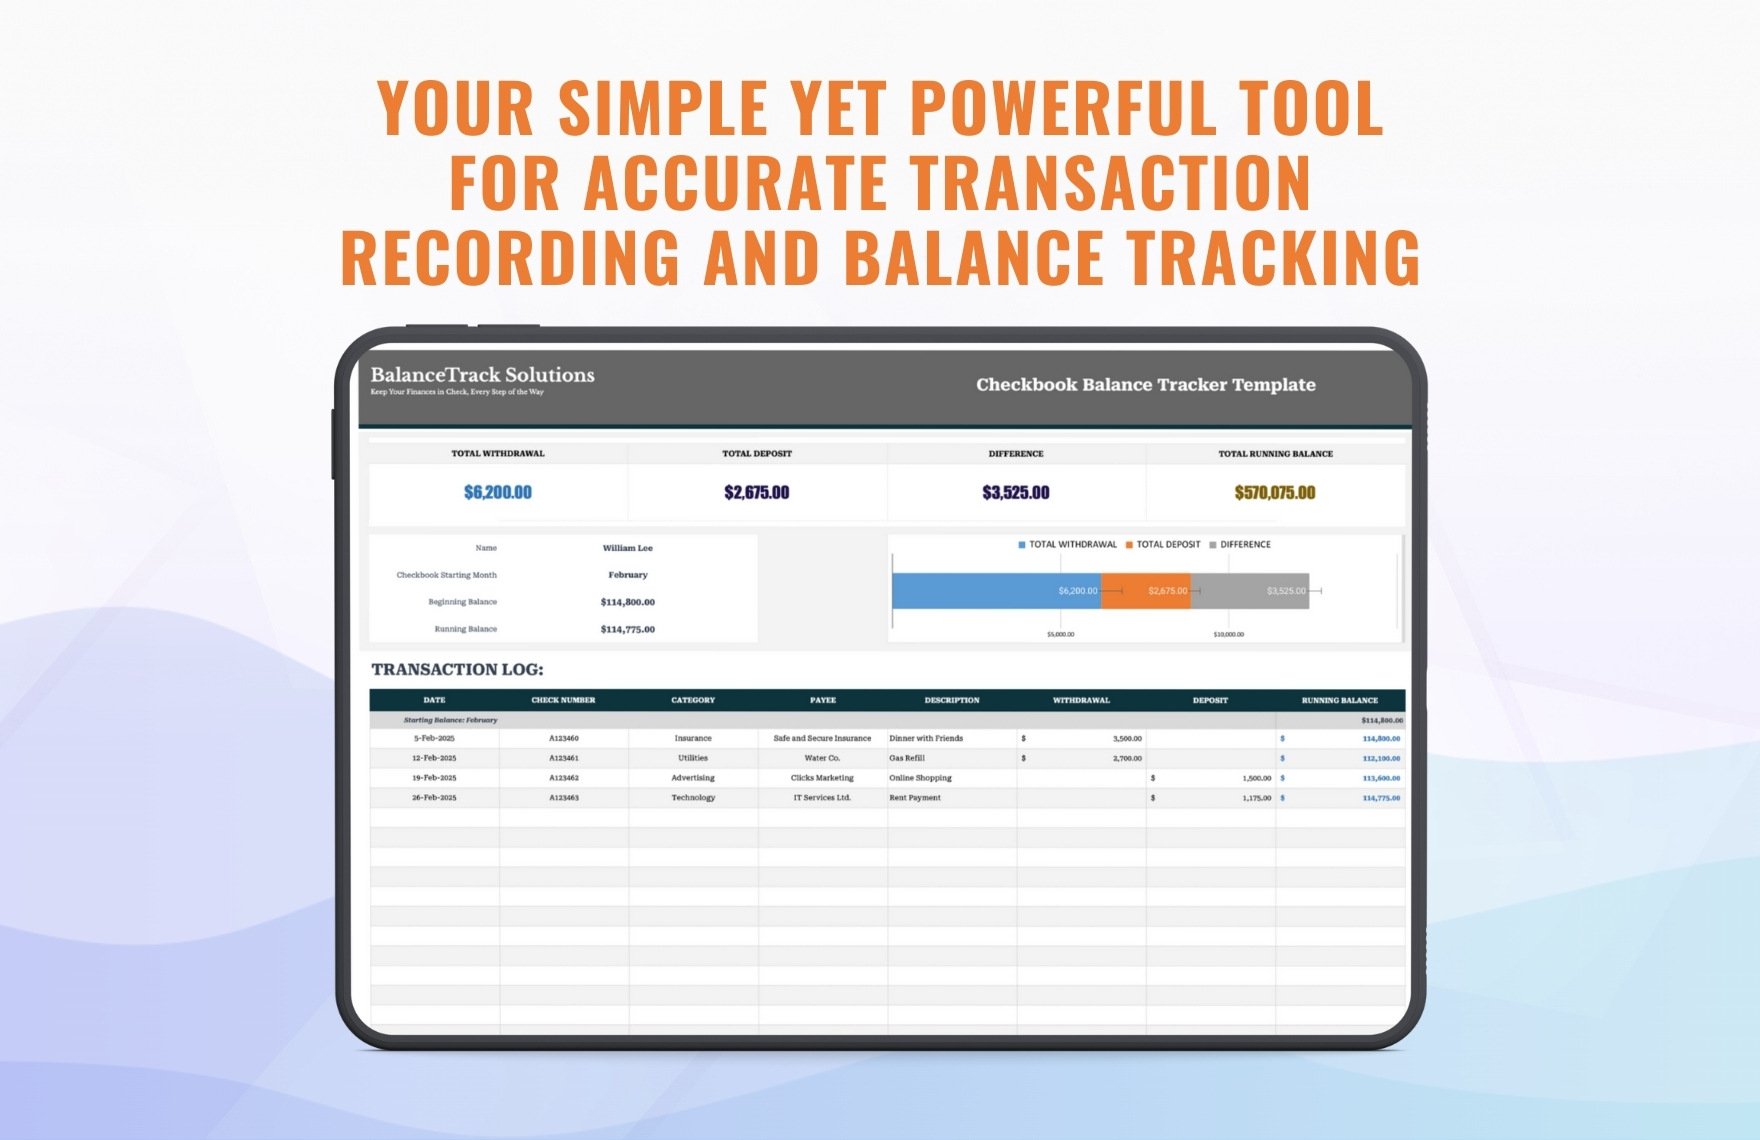 Checkbook Balance Tracker Template